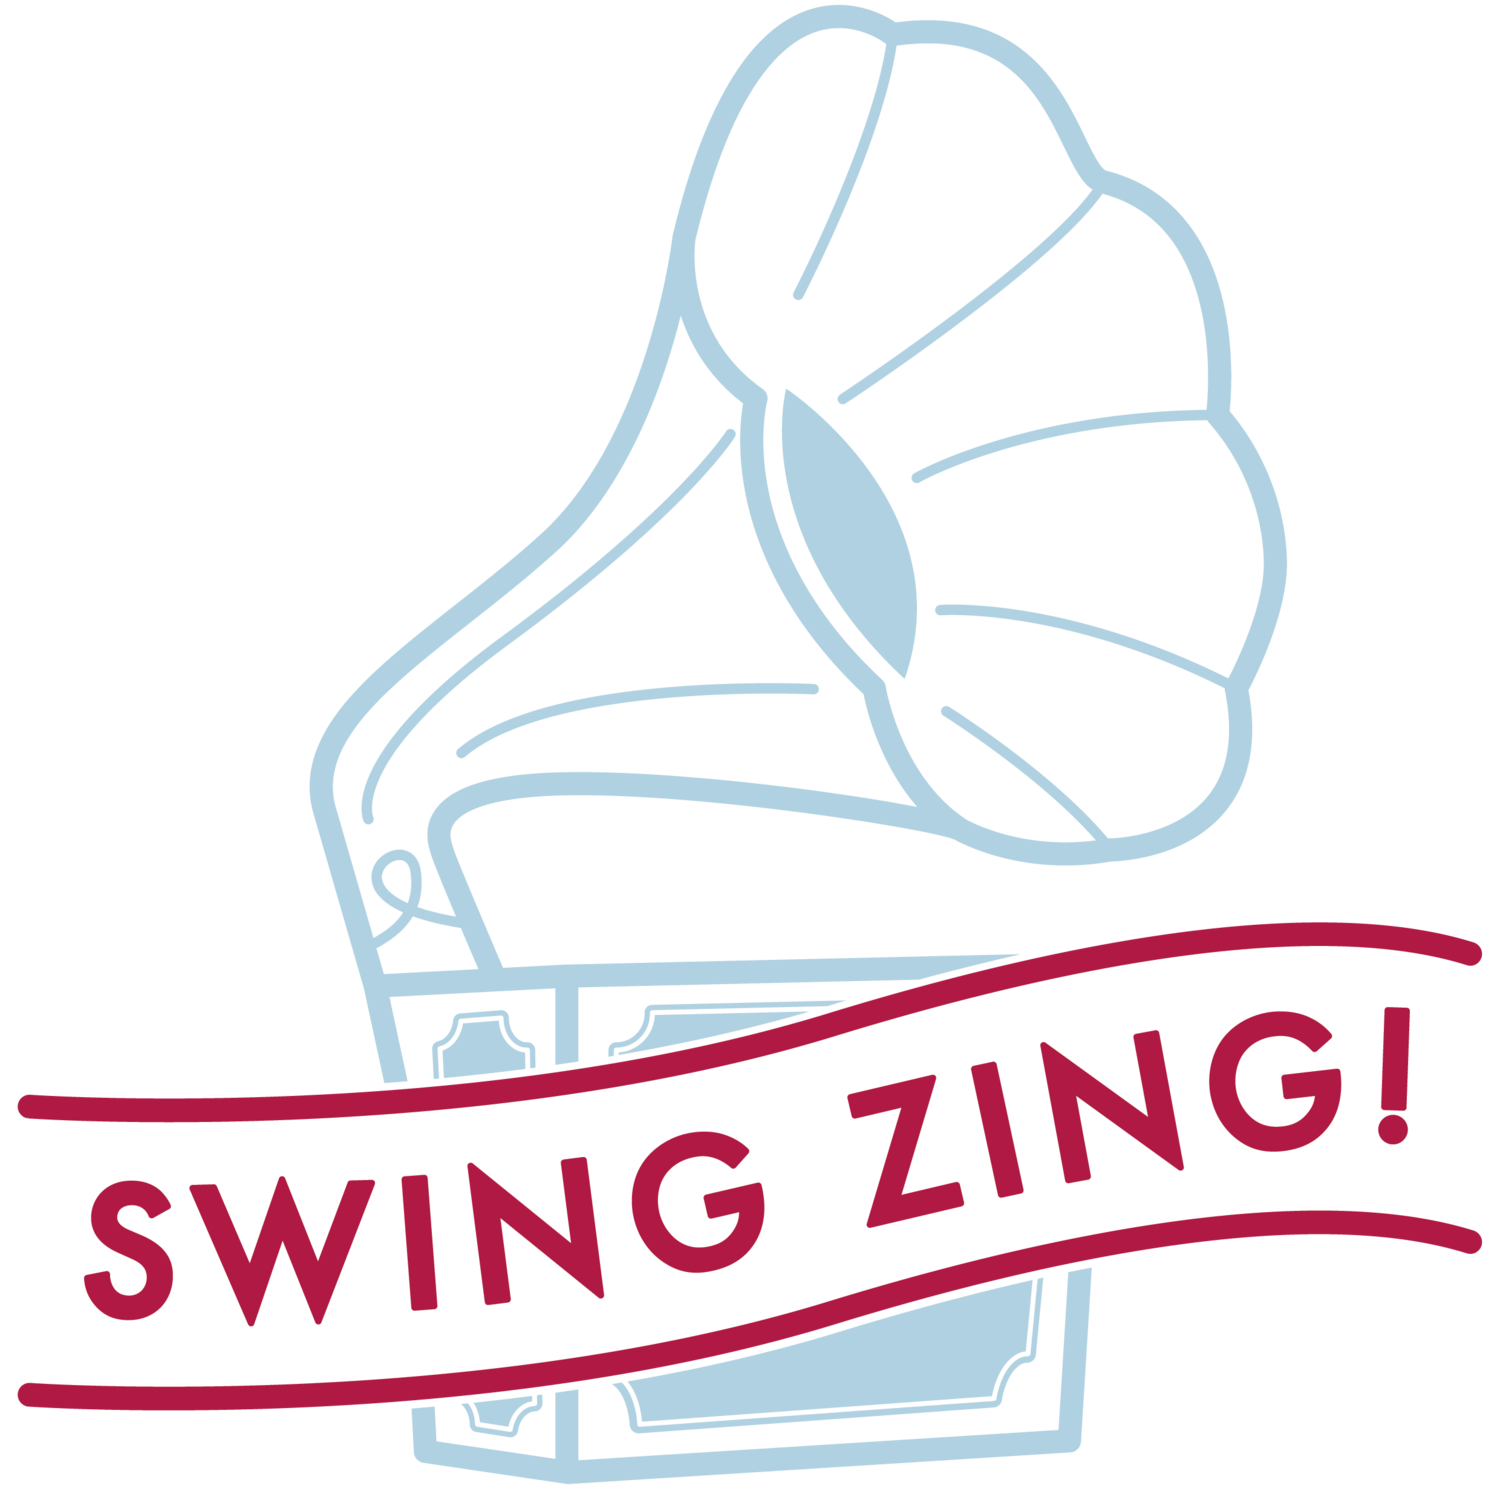 Swing Zing